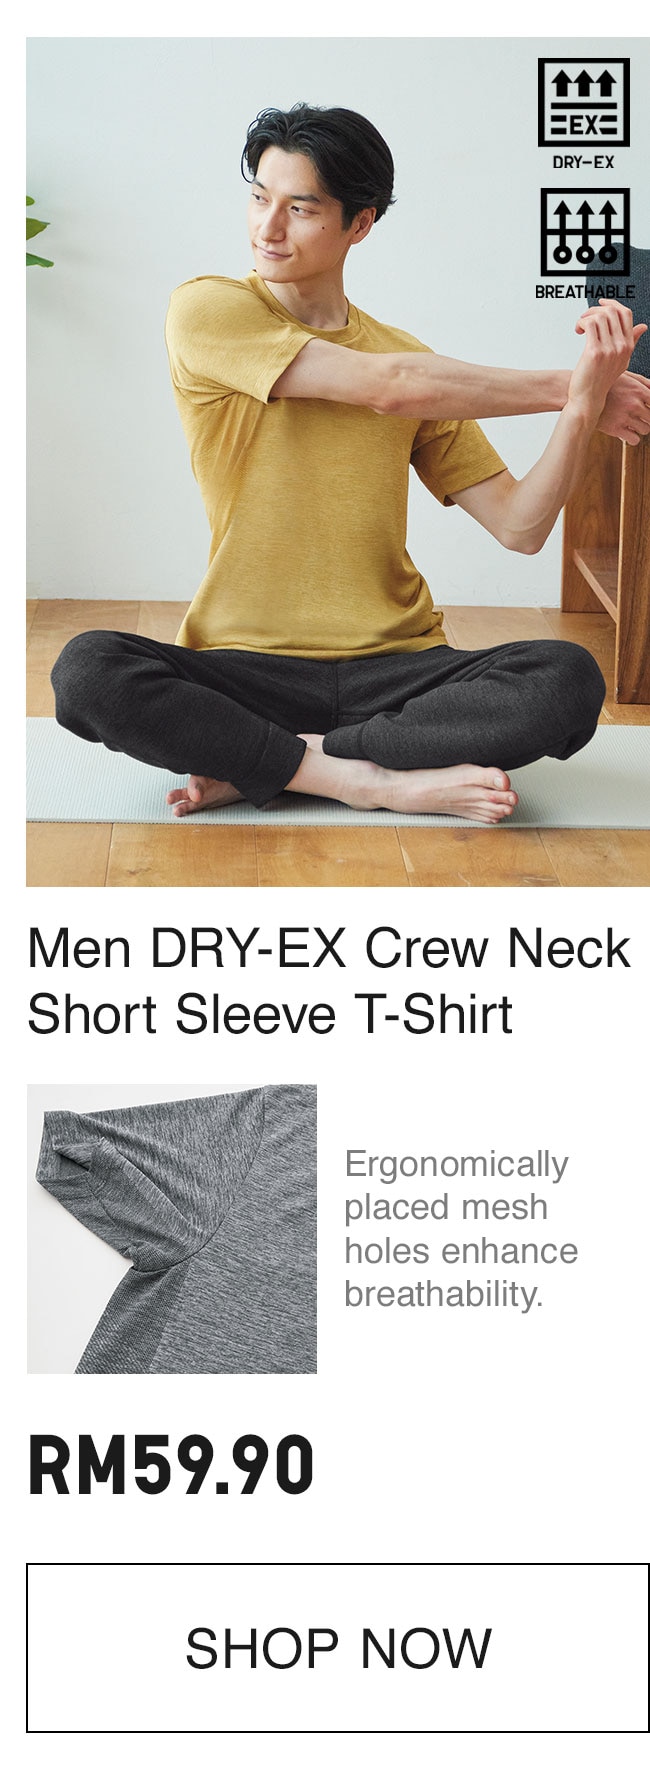 DRY-EX CREW NECK T-SHIRT